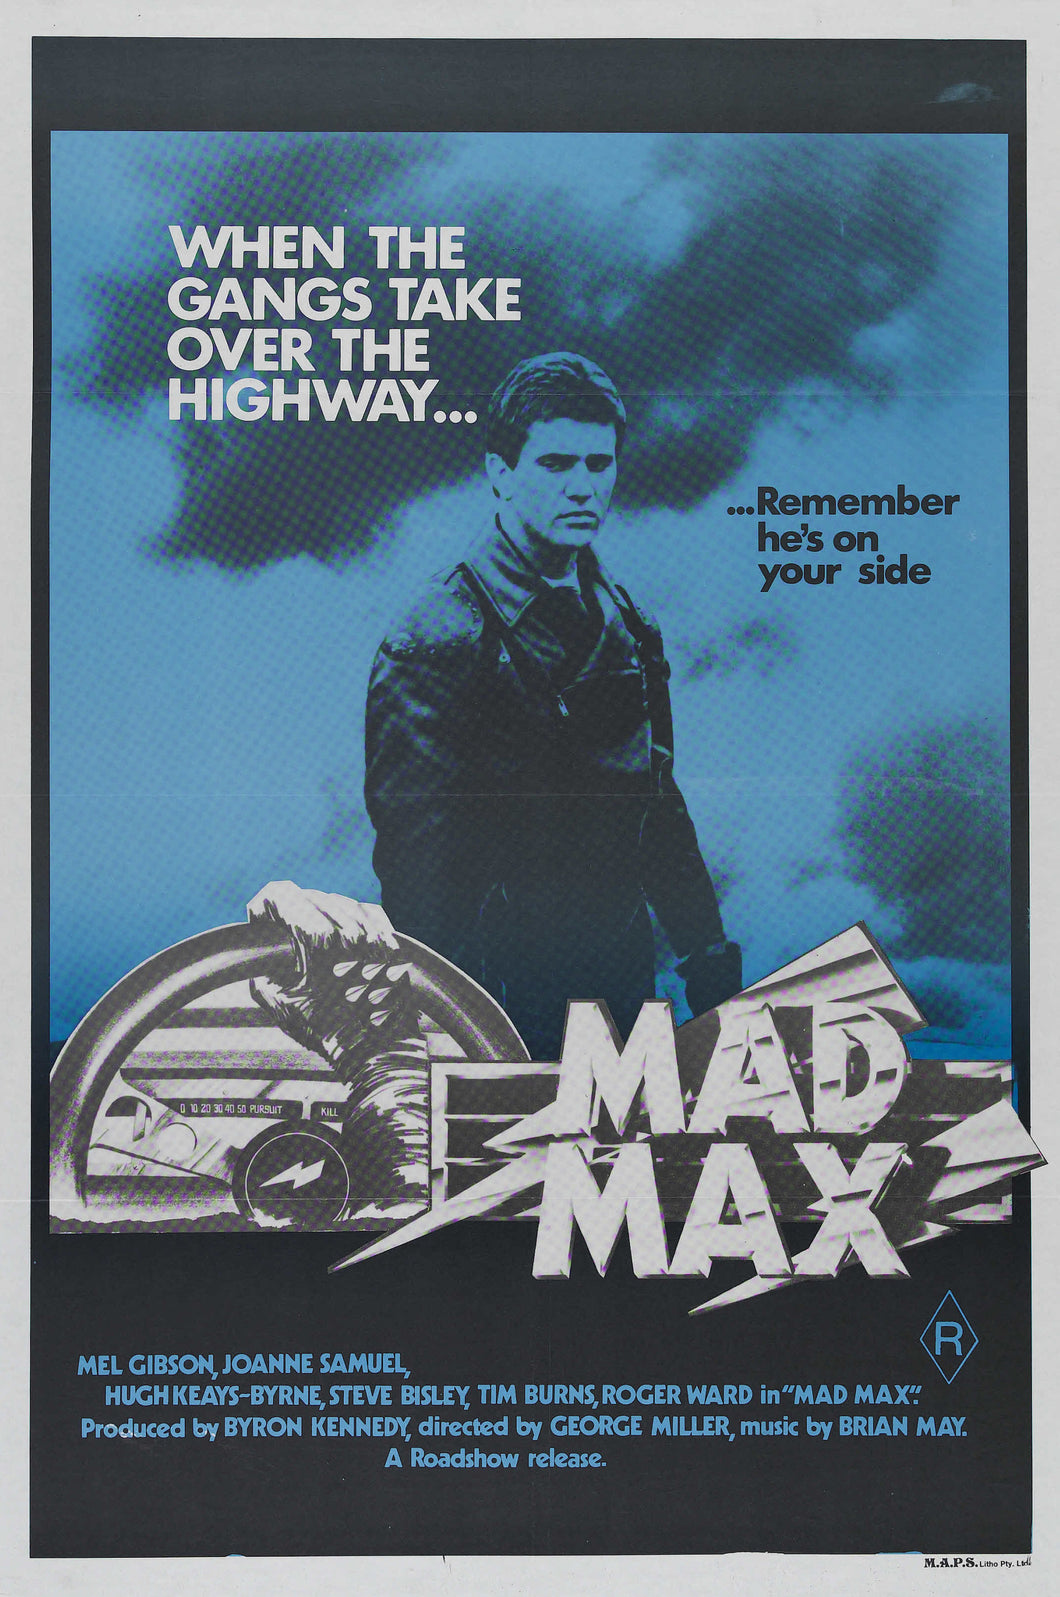 Poster Pelicula Mad Max